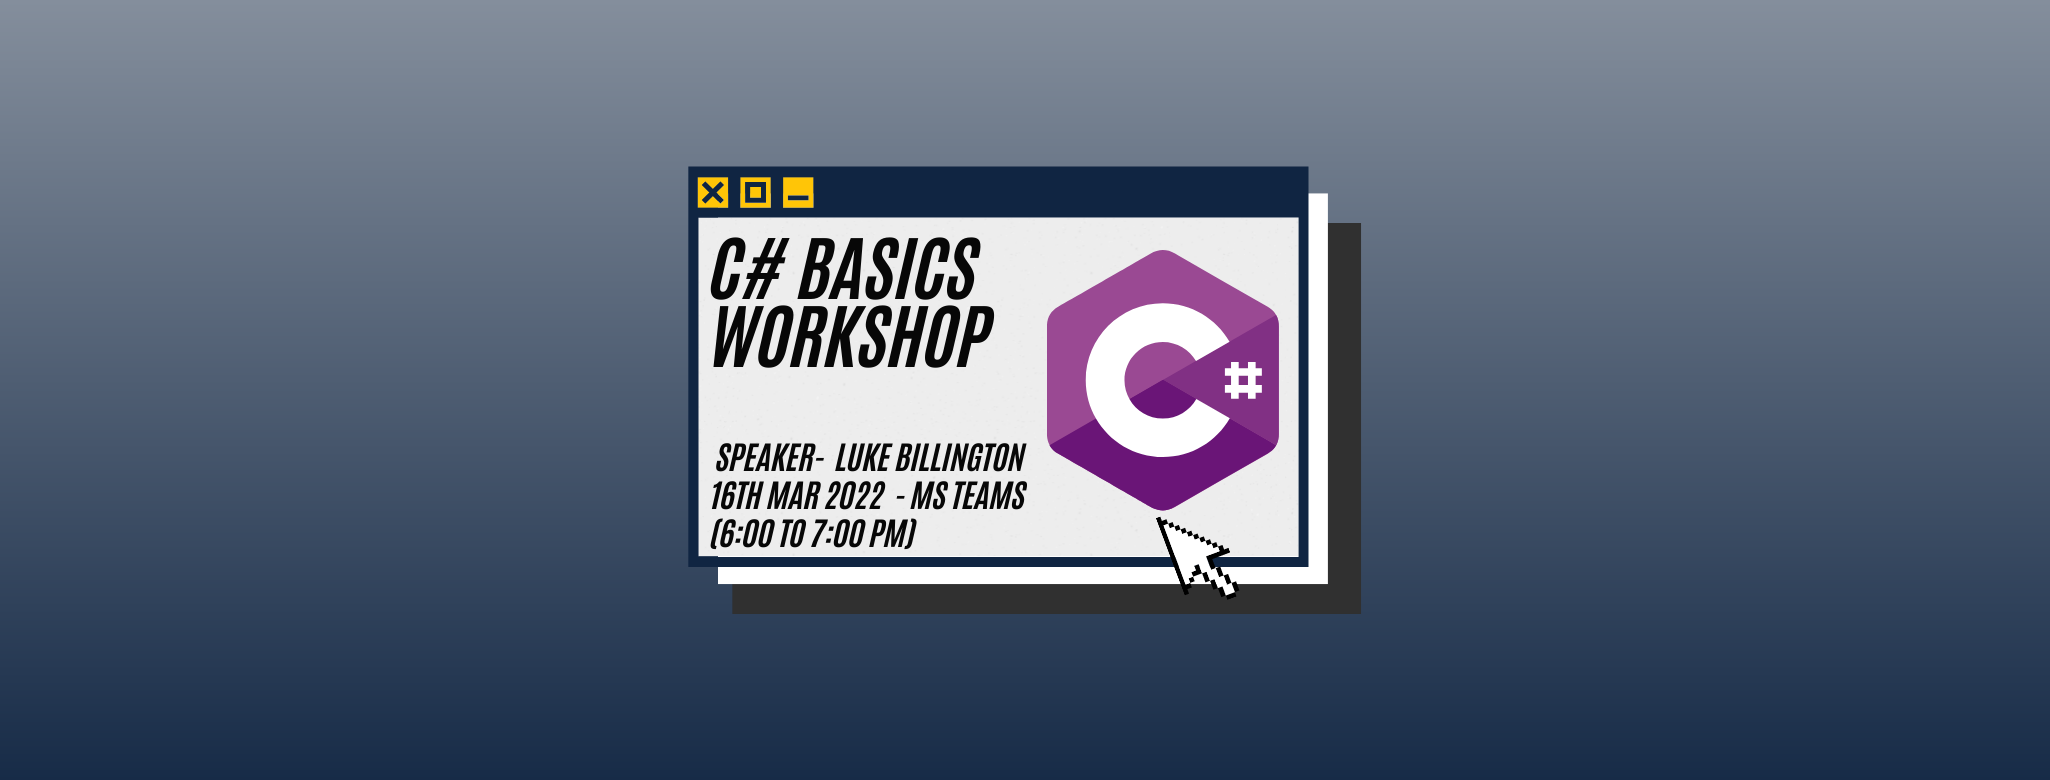 C# Workshop Banner